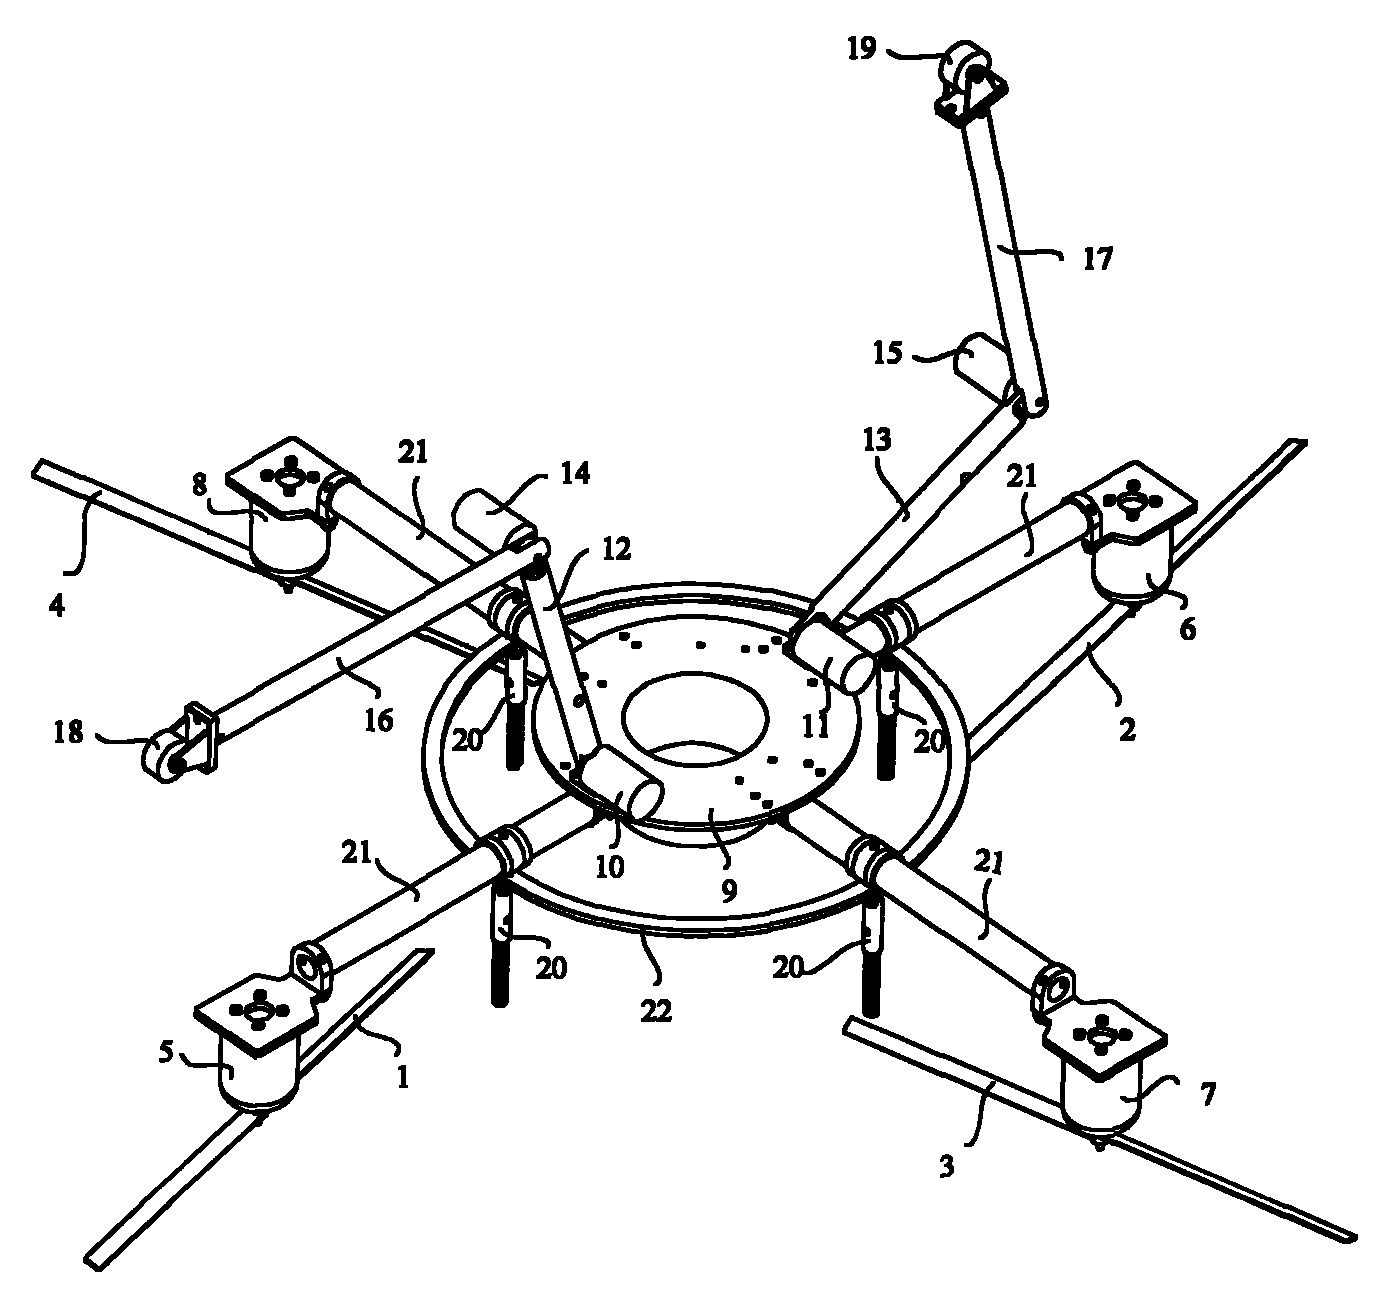 Multi-rotor wheel-leg type multifunctional air robot and sports programming method thereof